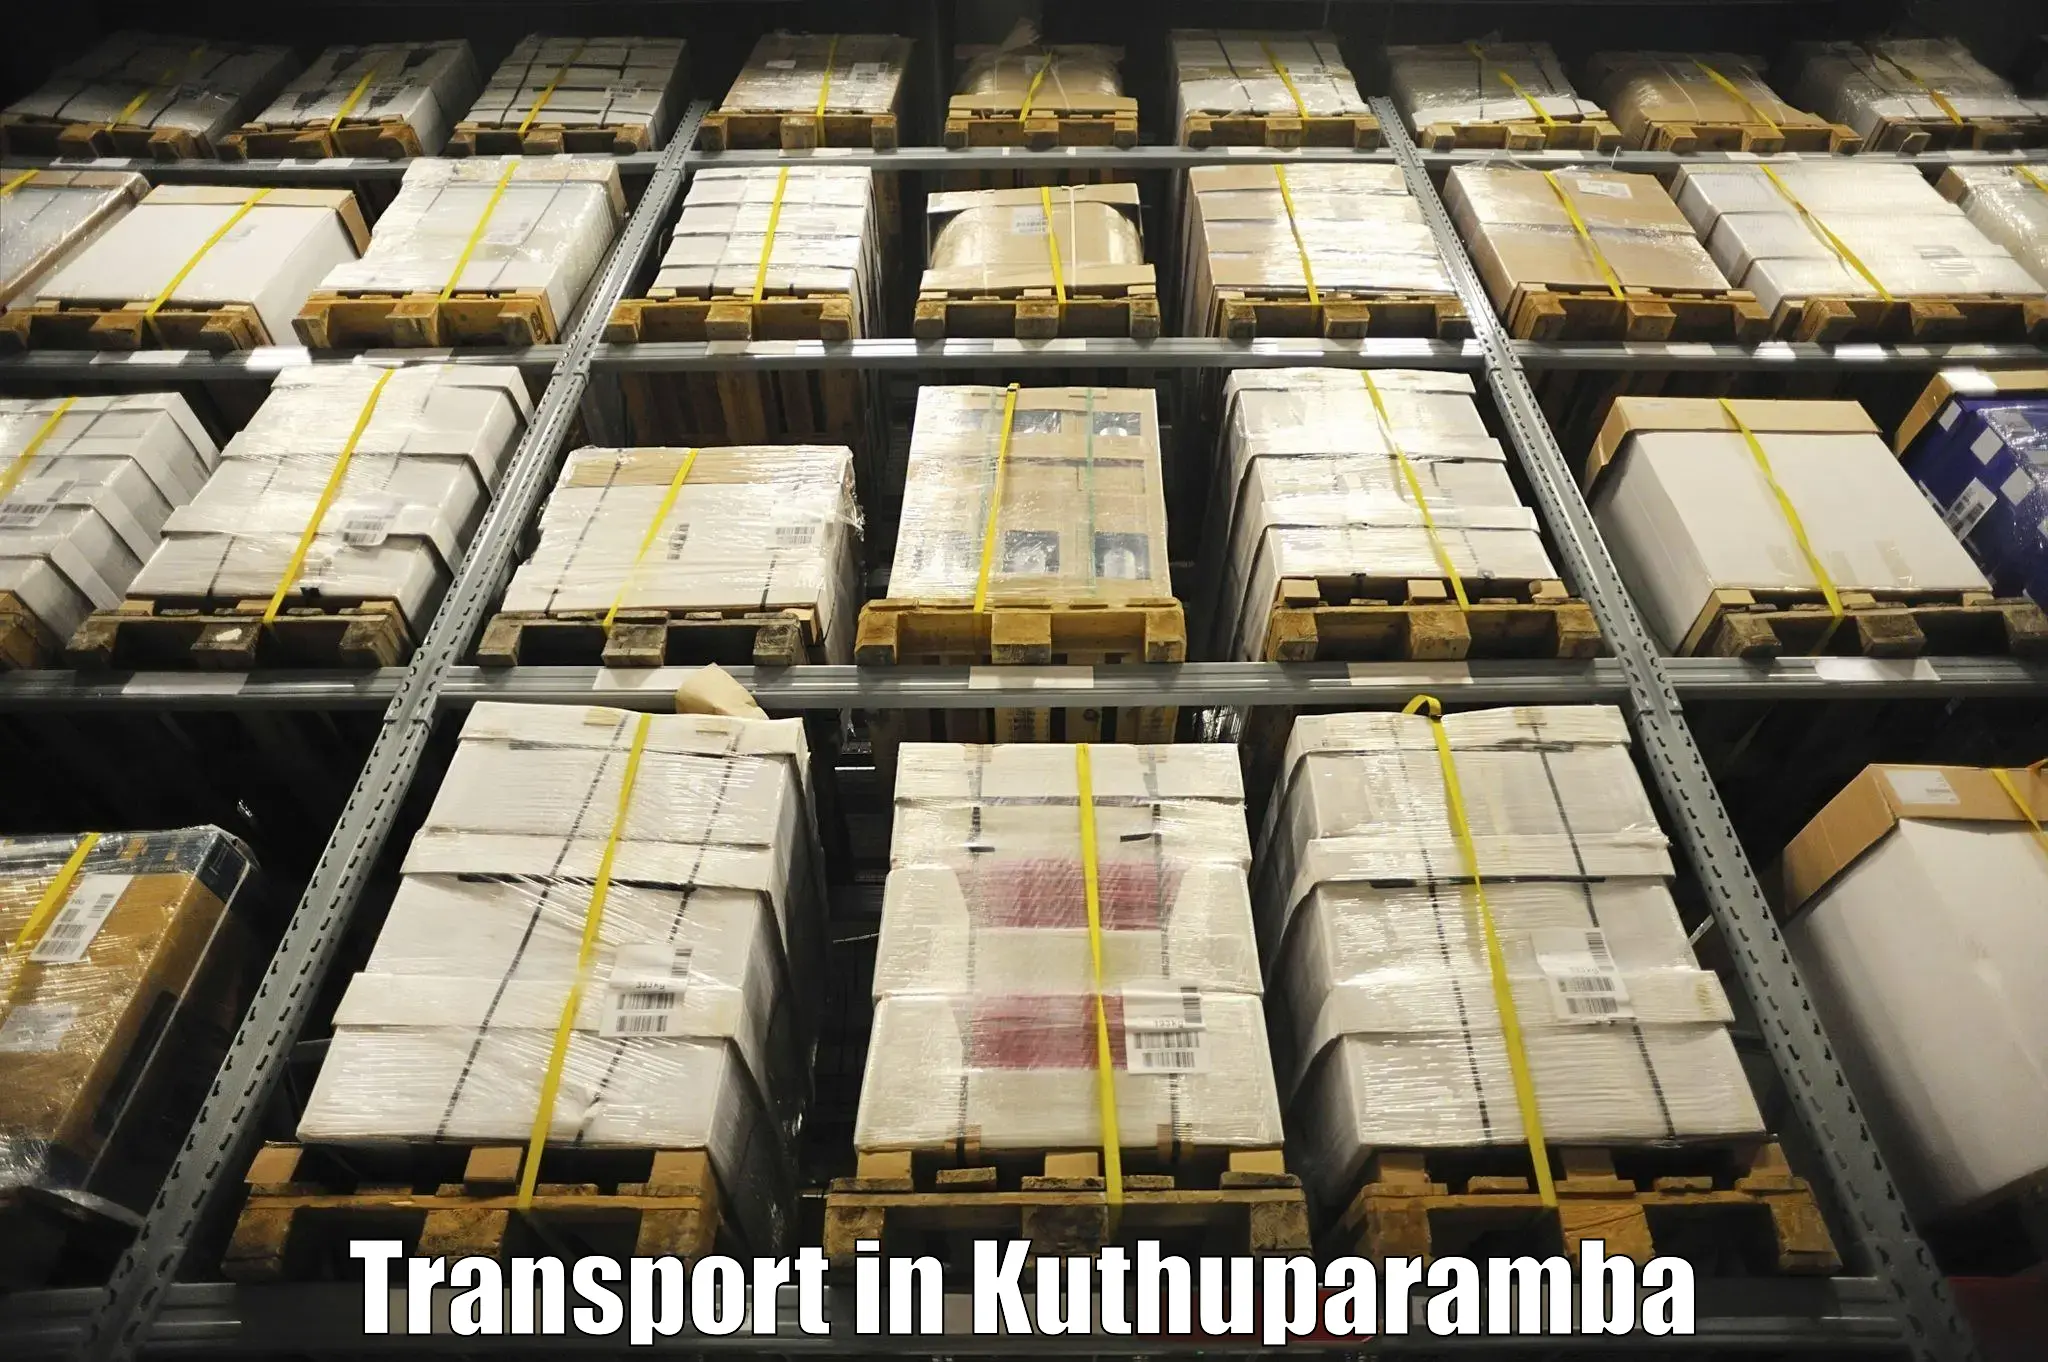 Transport in sharing in Kuthuparamba